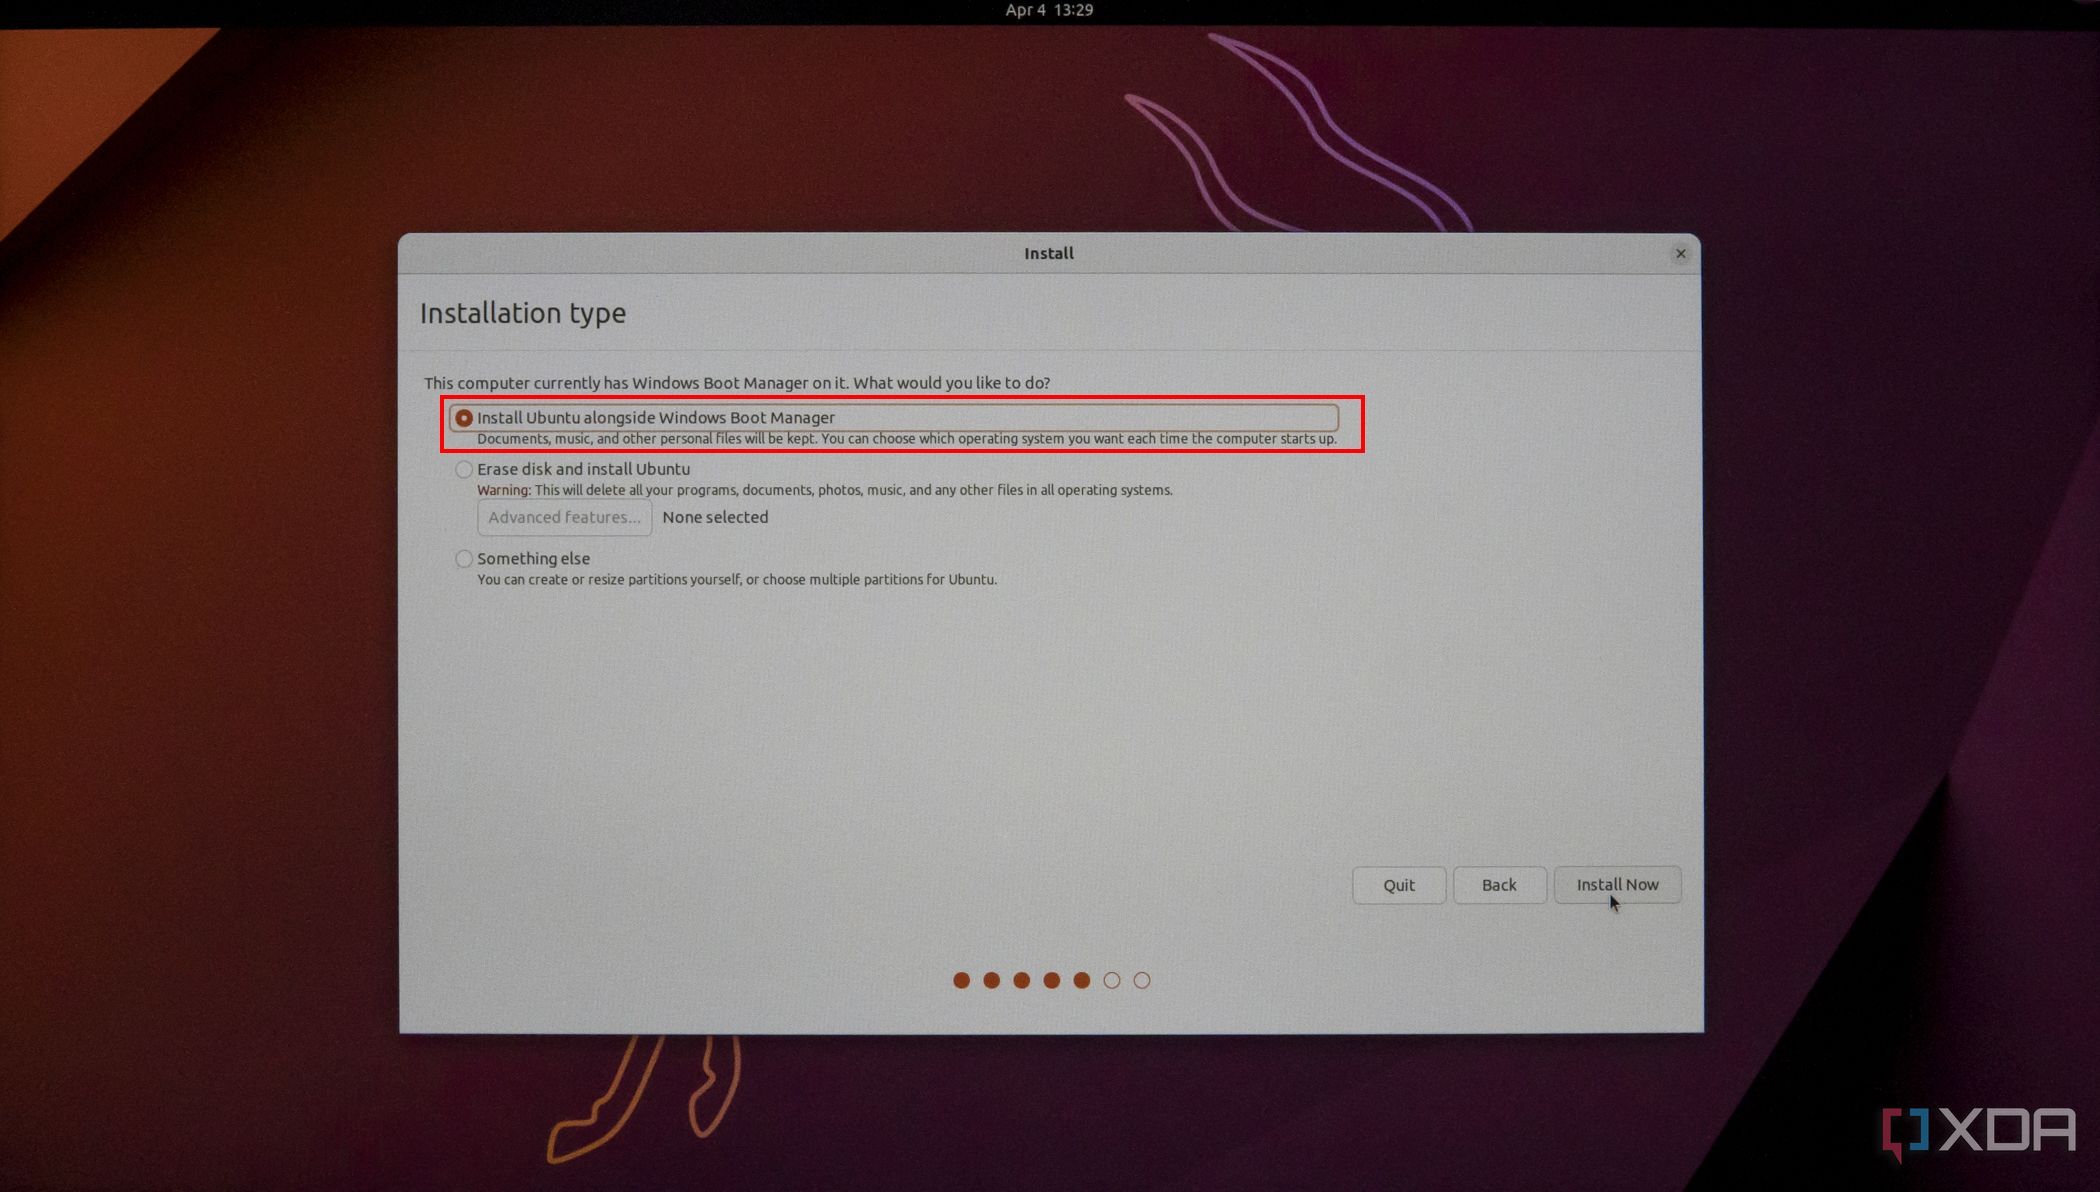 Screenshot of Ubuntu installer with the option to install Ubuntu alongside Windows highlighted